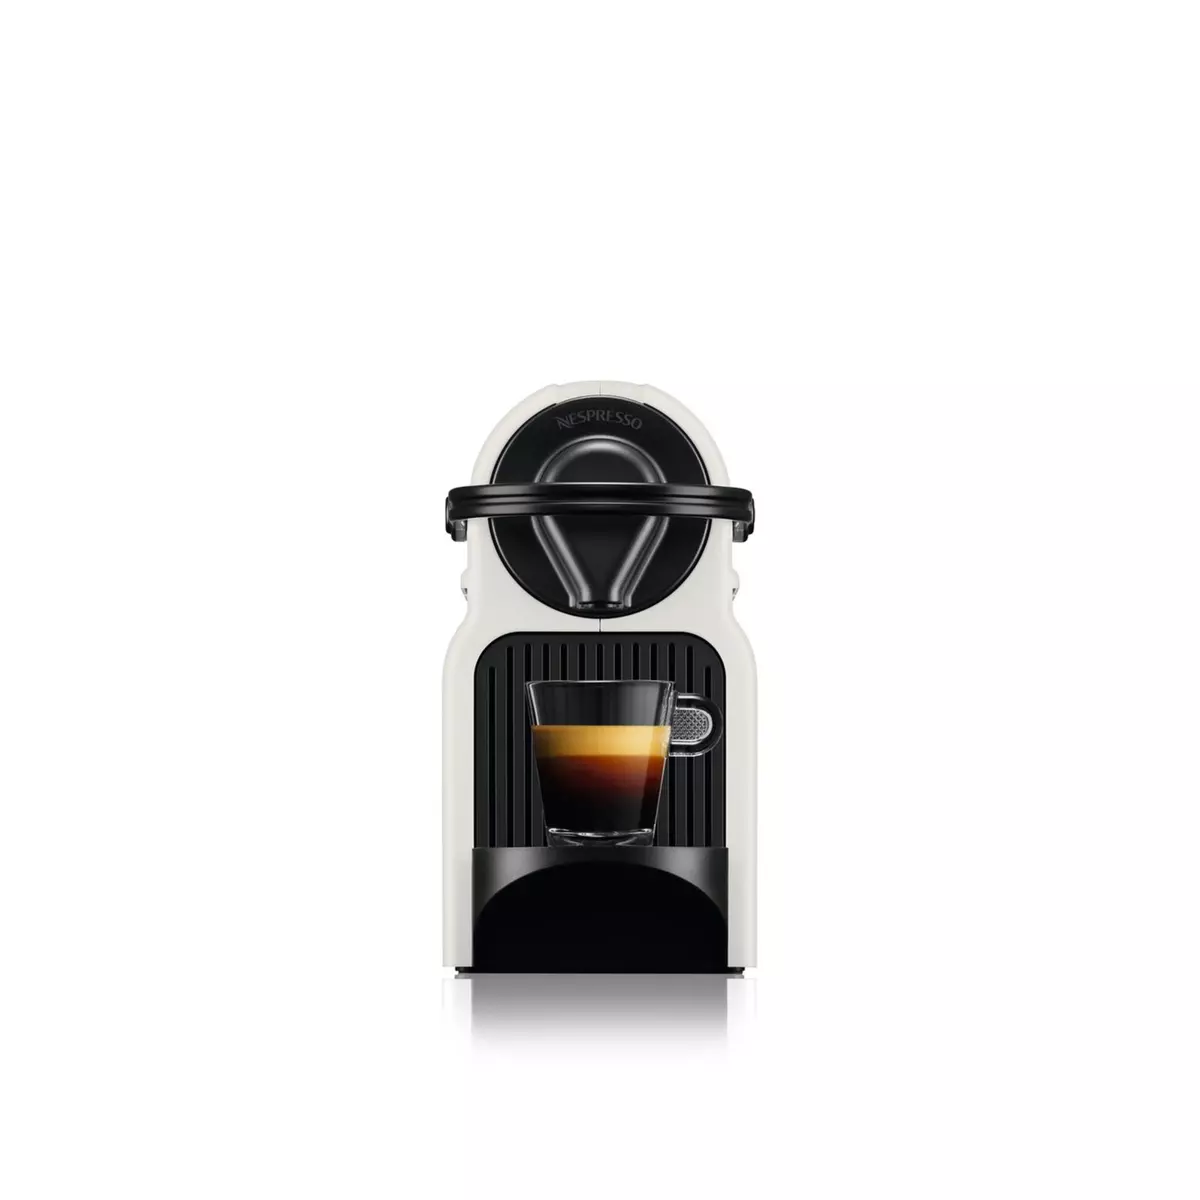 KRUPS Machine expresso Nespresso Inissia - YY1530FD